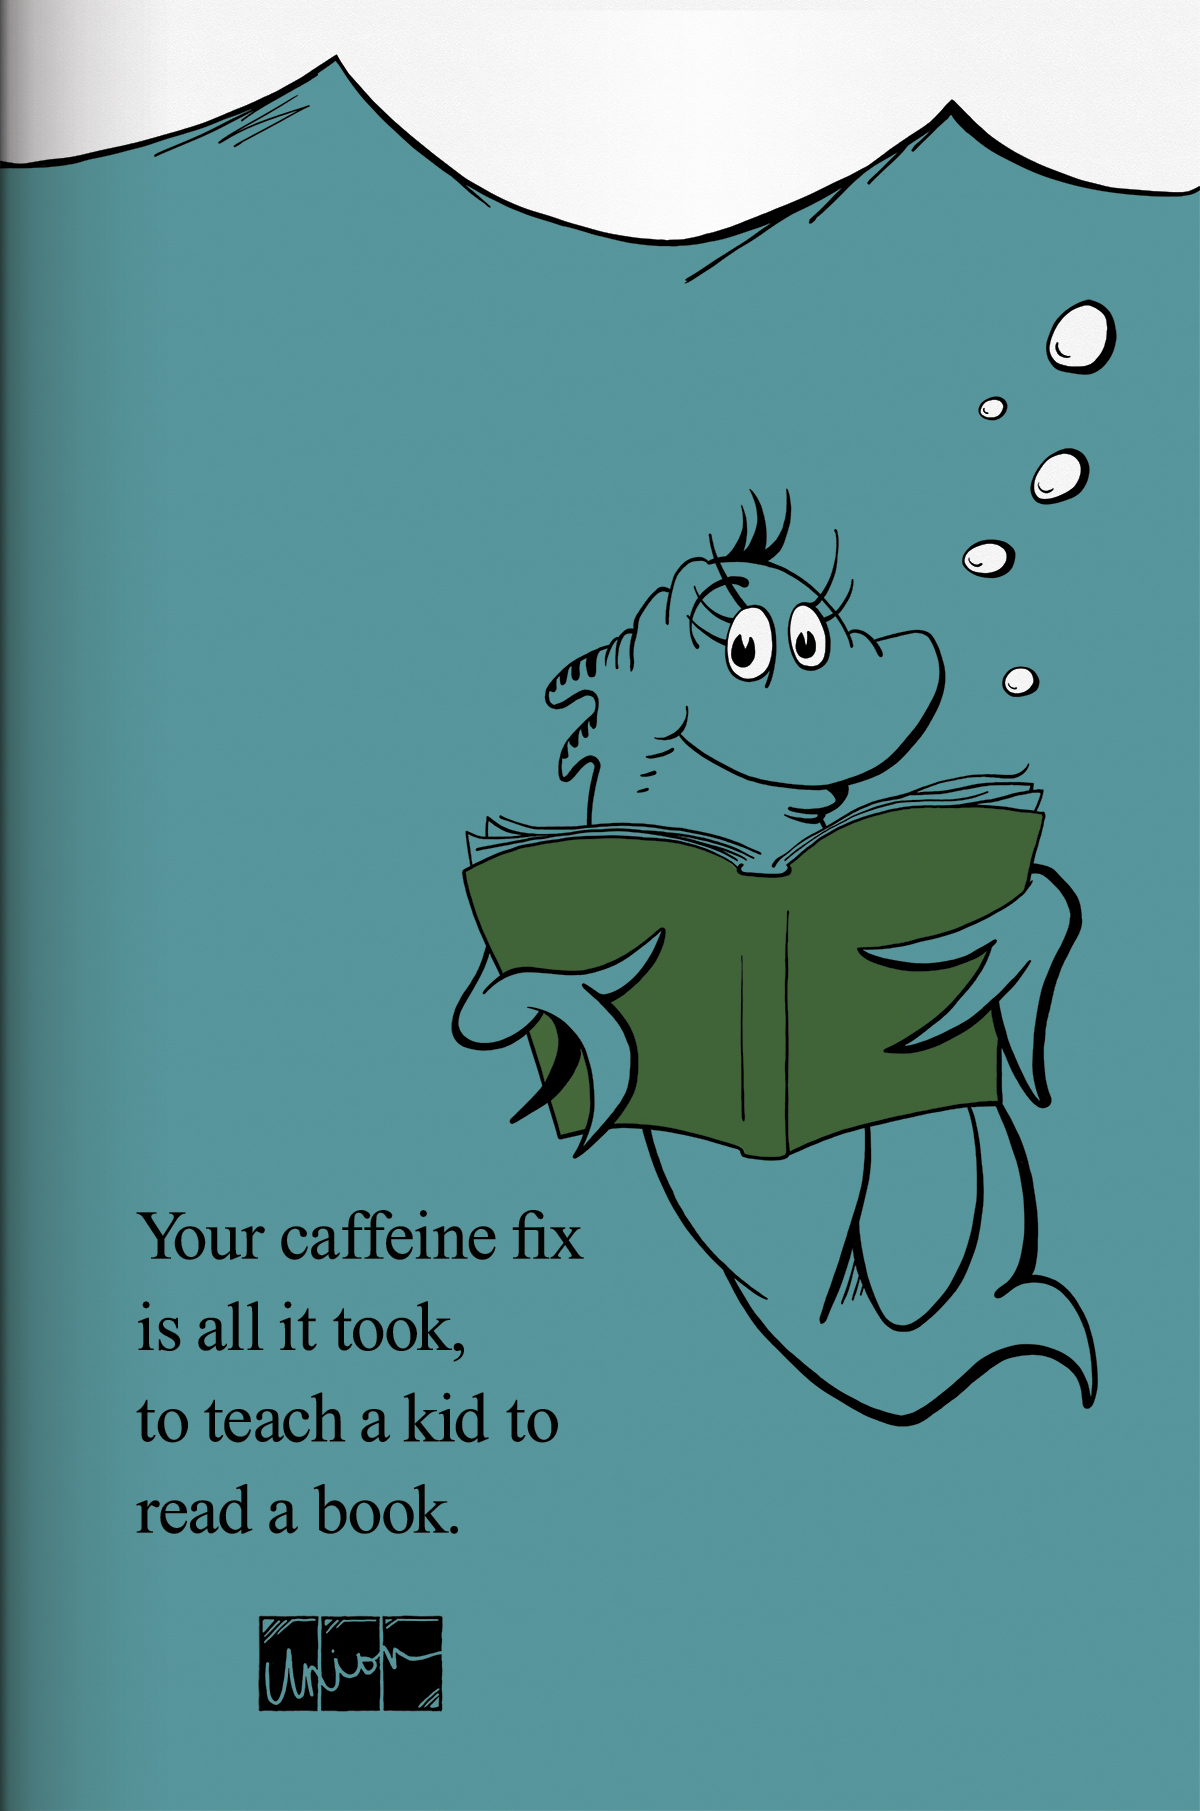 Union Coffee Poster for Child Literacy - Dr. Seuss â€œFishâ€ by Tidal Wave Marketing